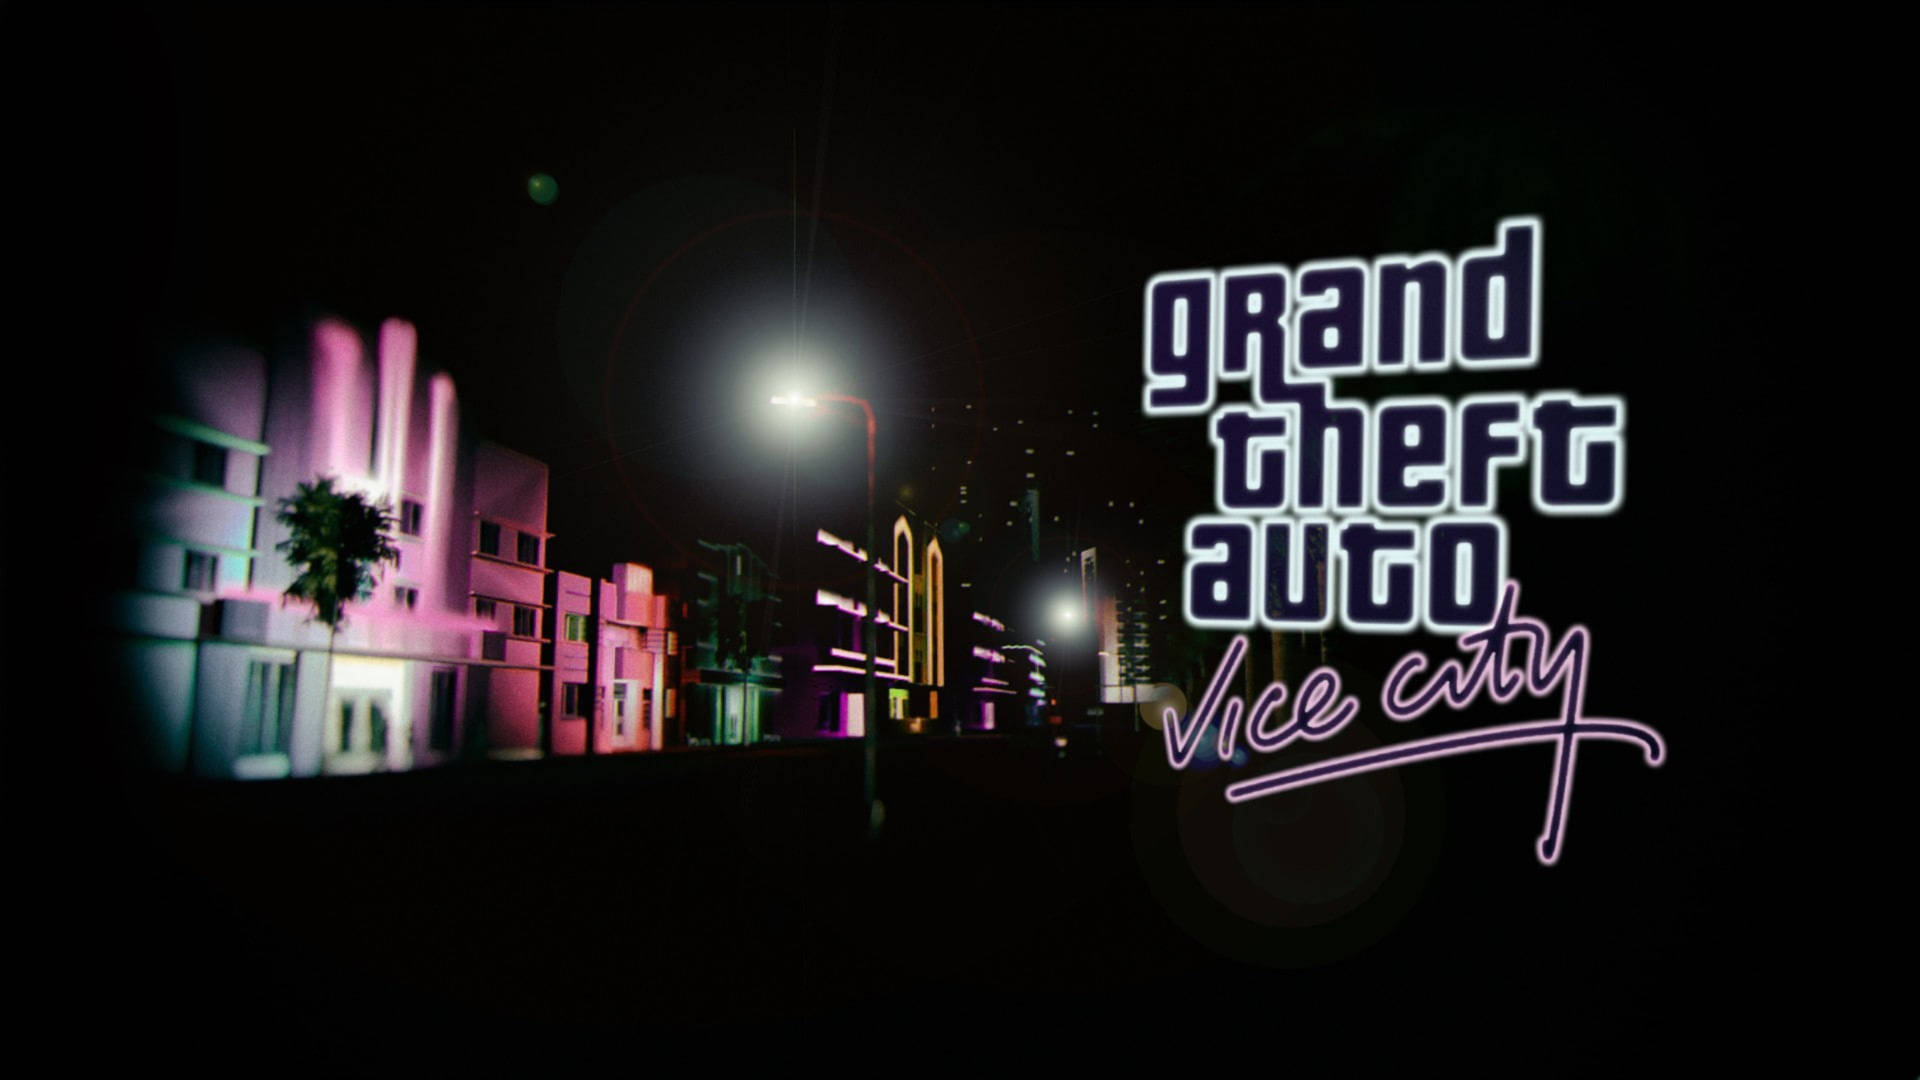 Grand Theft Auto Vice City Cover Wallpaper